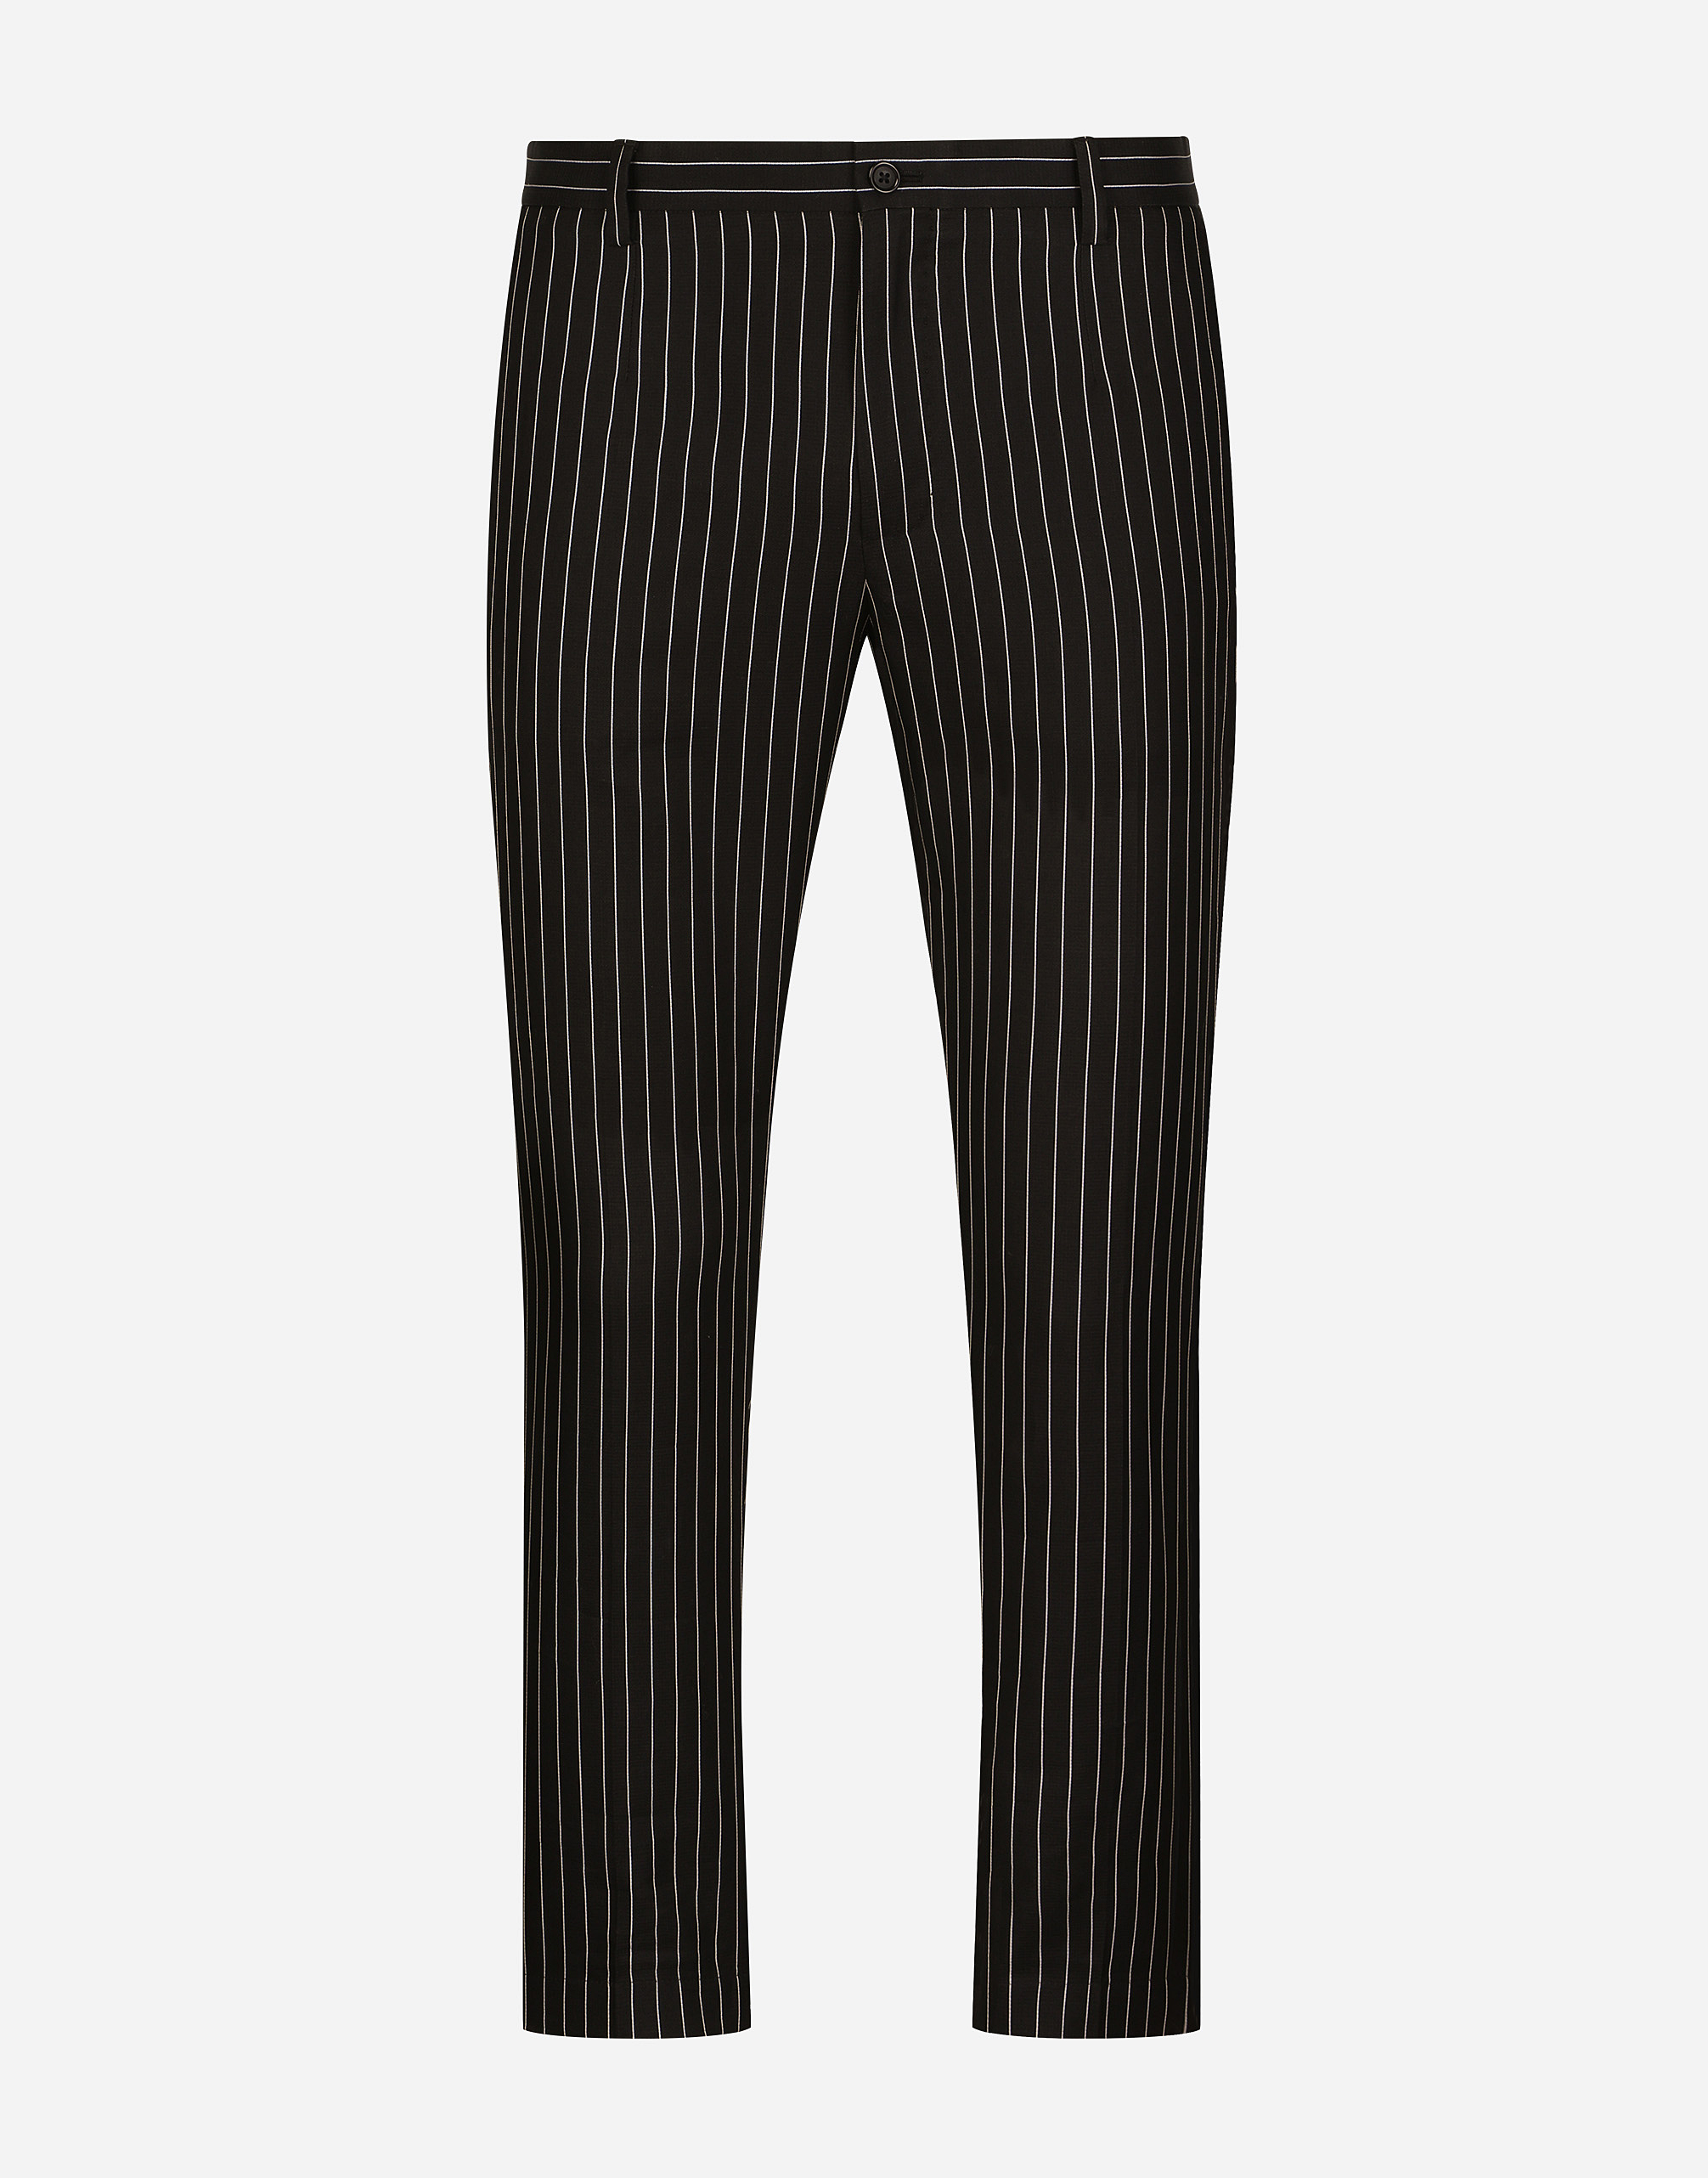 Striped jacquard pants in Multicolor